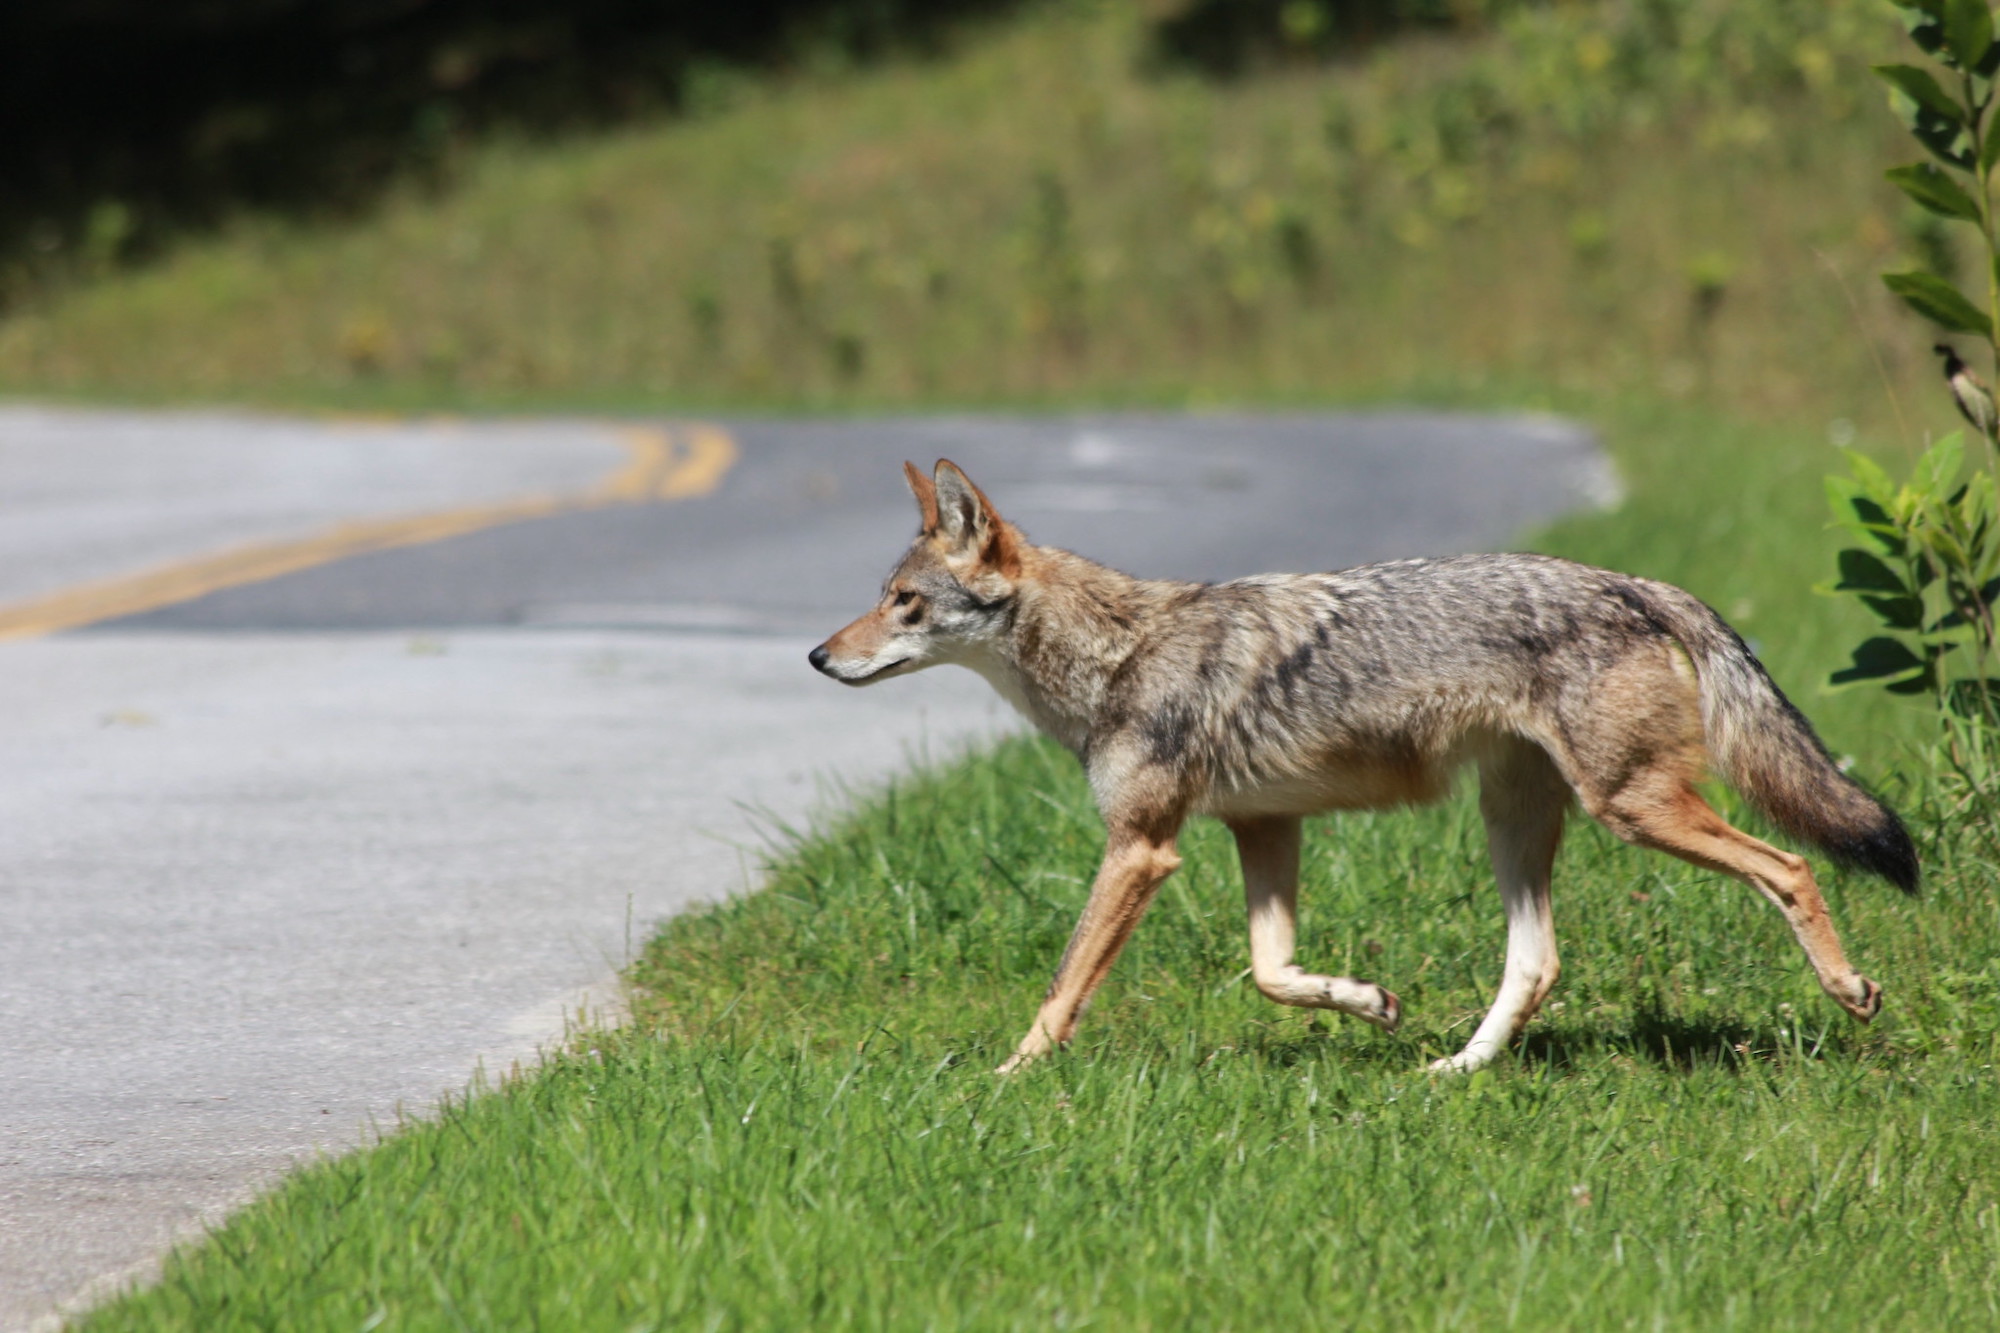 Landowner-Tagged Coyote Travels 100-Plus Miles Across Ohio